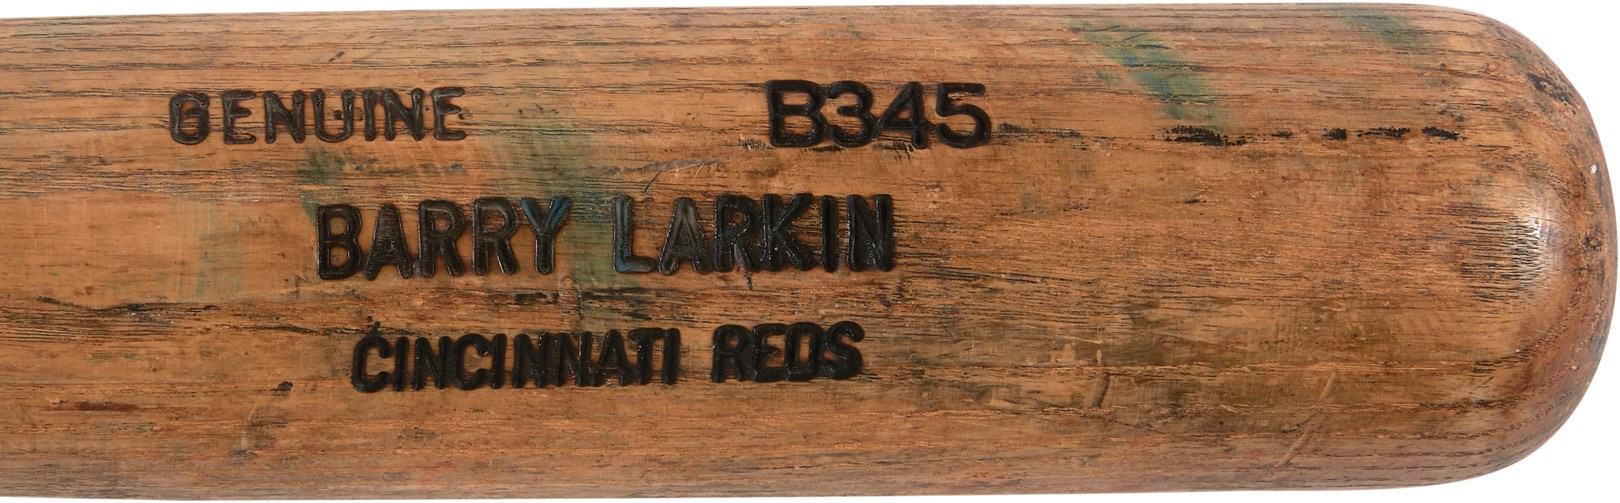 Pete Rose & Cincinnati Reds - 2003-04 Barry Larkin Game Used Reds Bat (PSA GU 10)